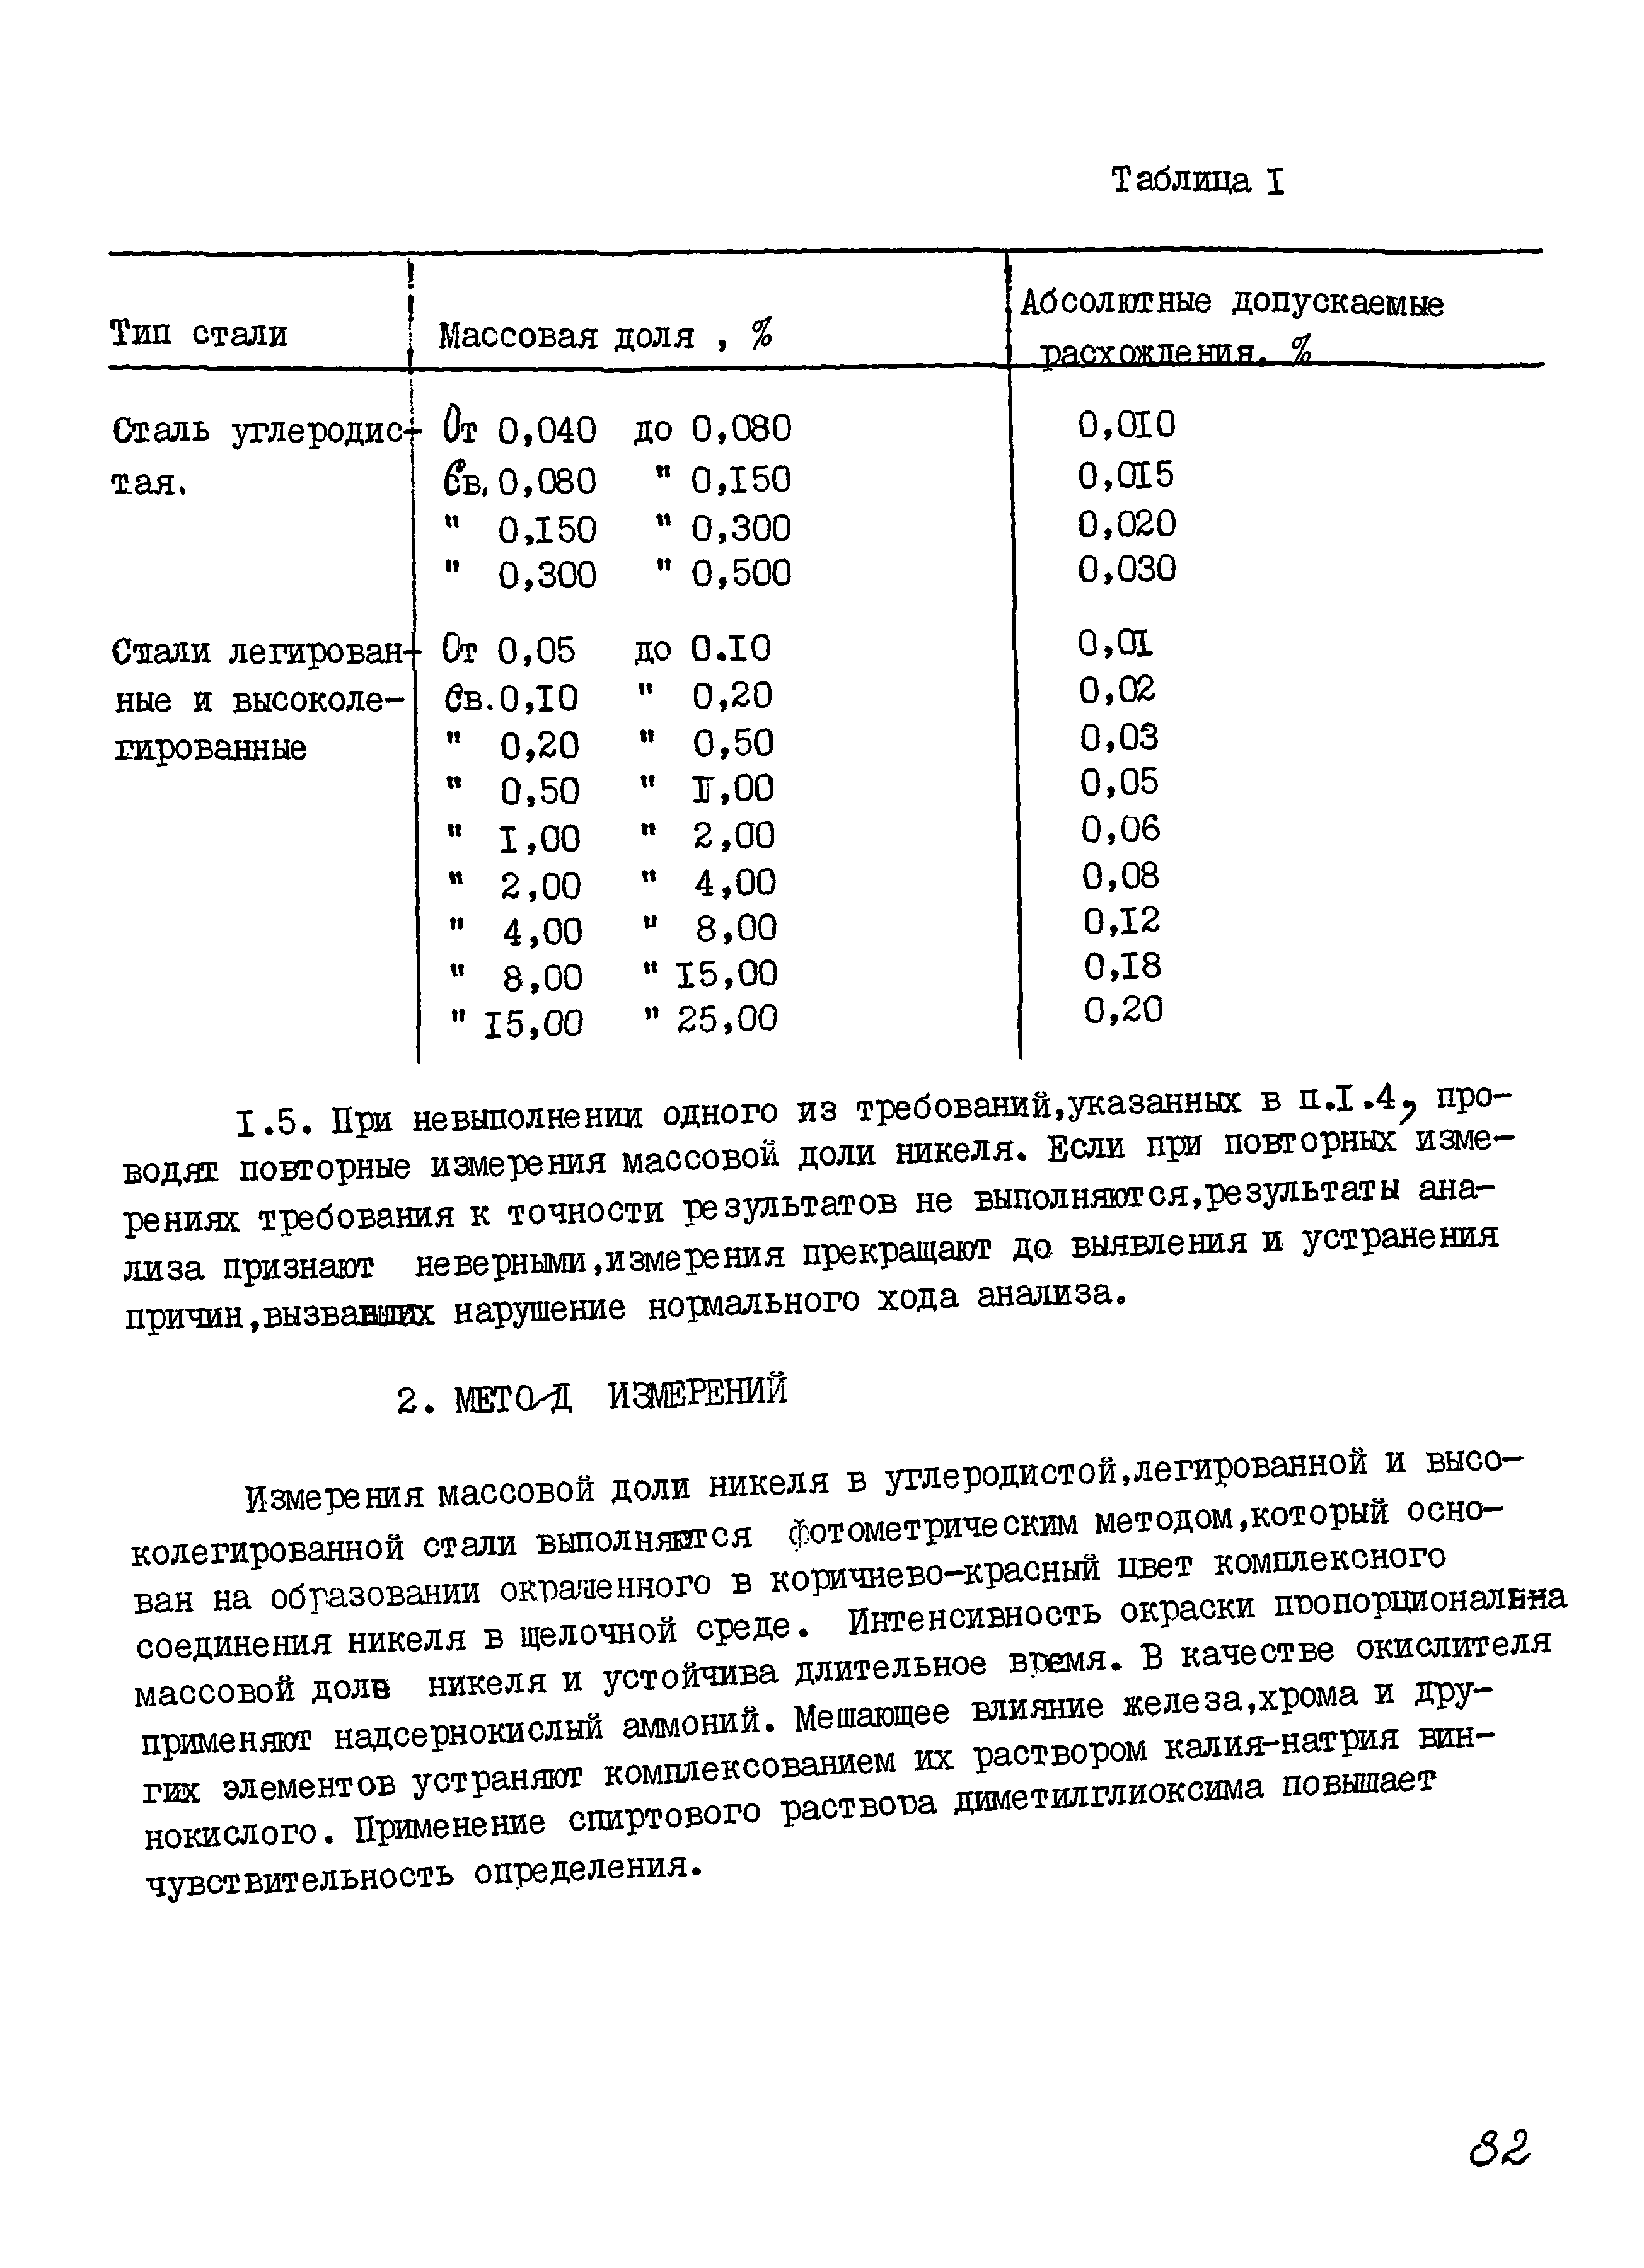 РДМ 929-13-93